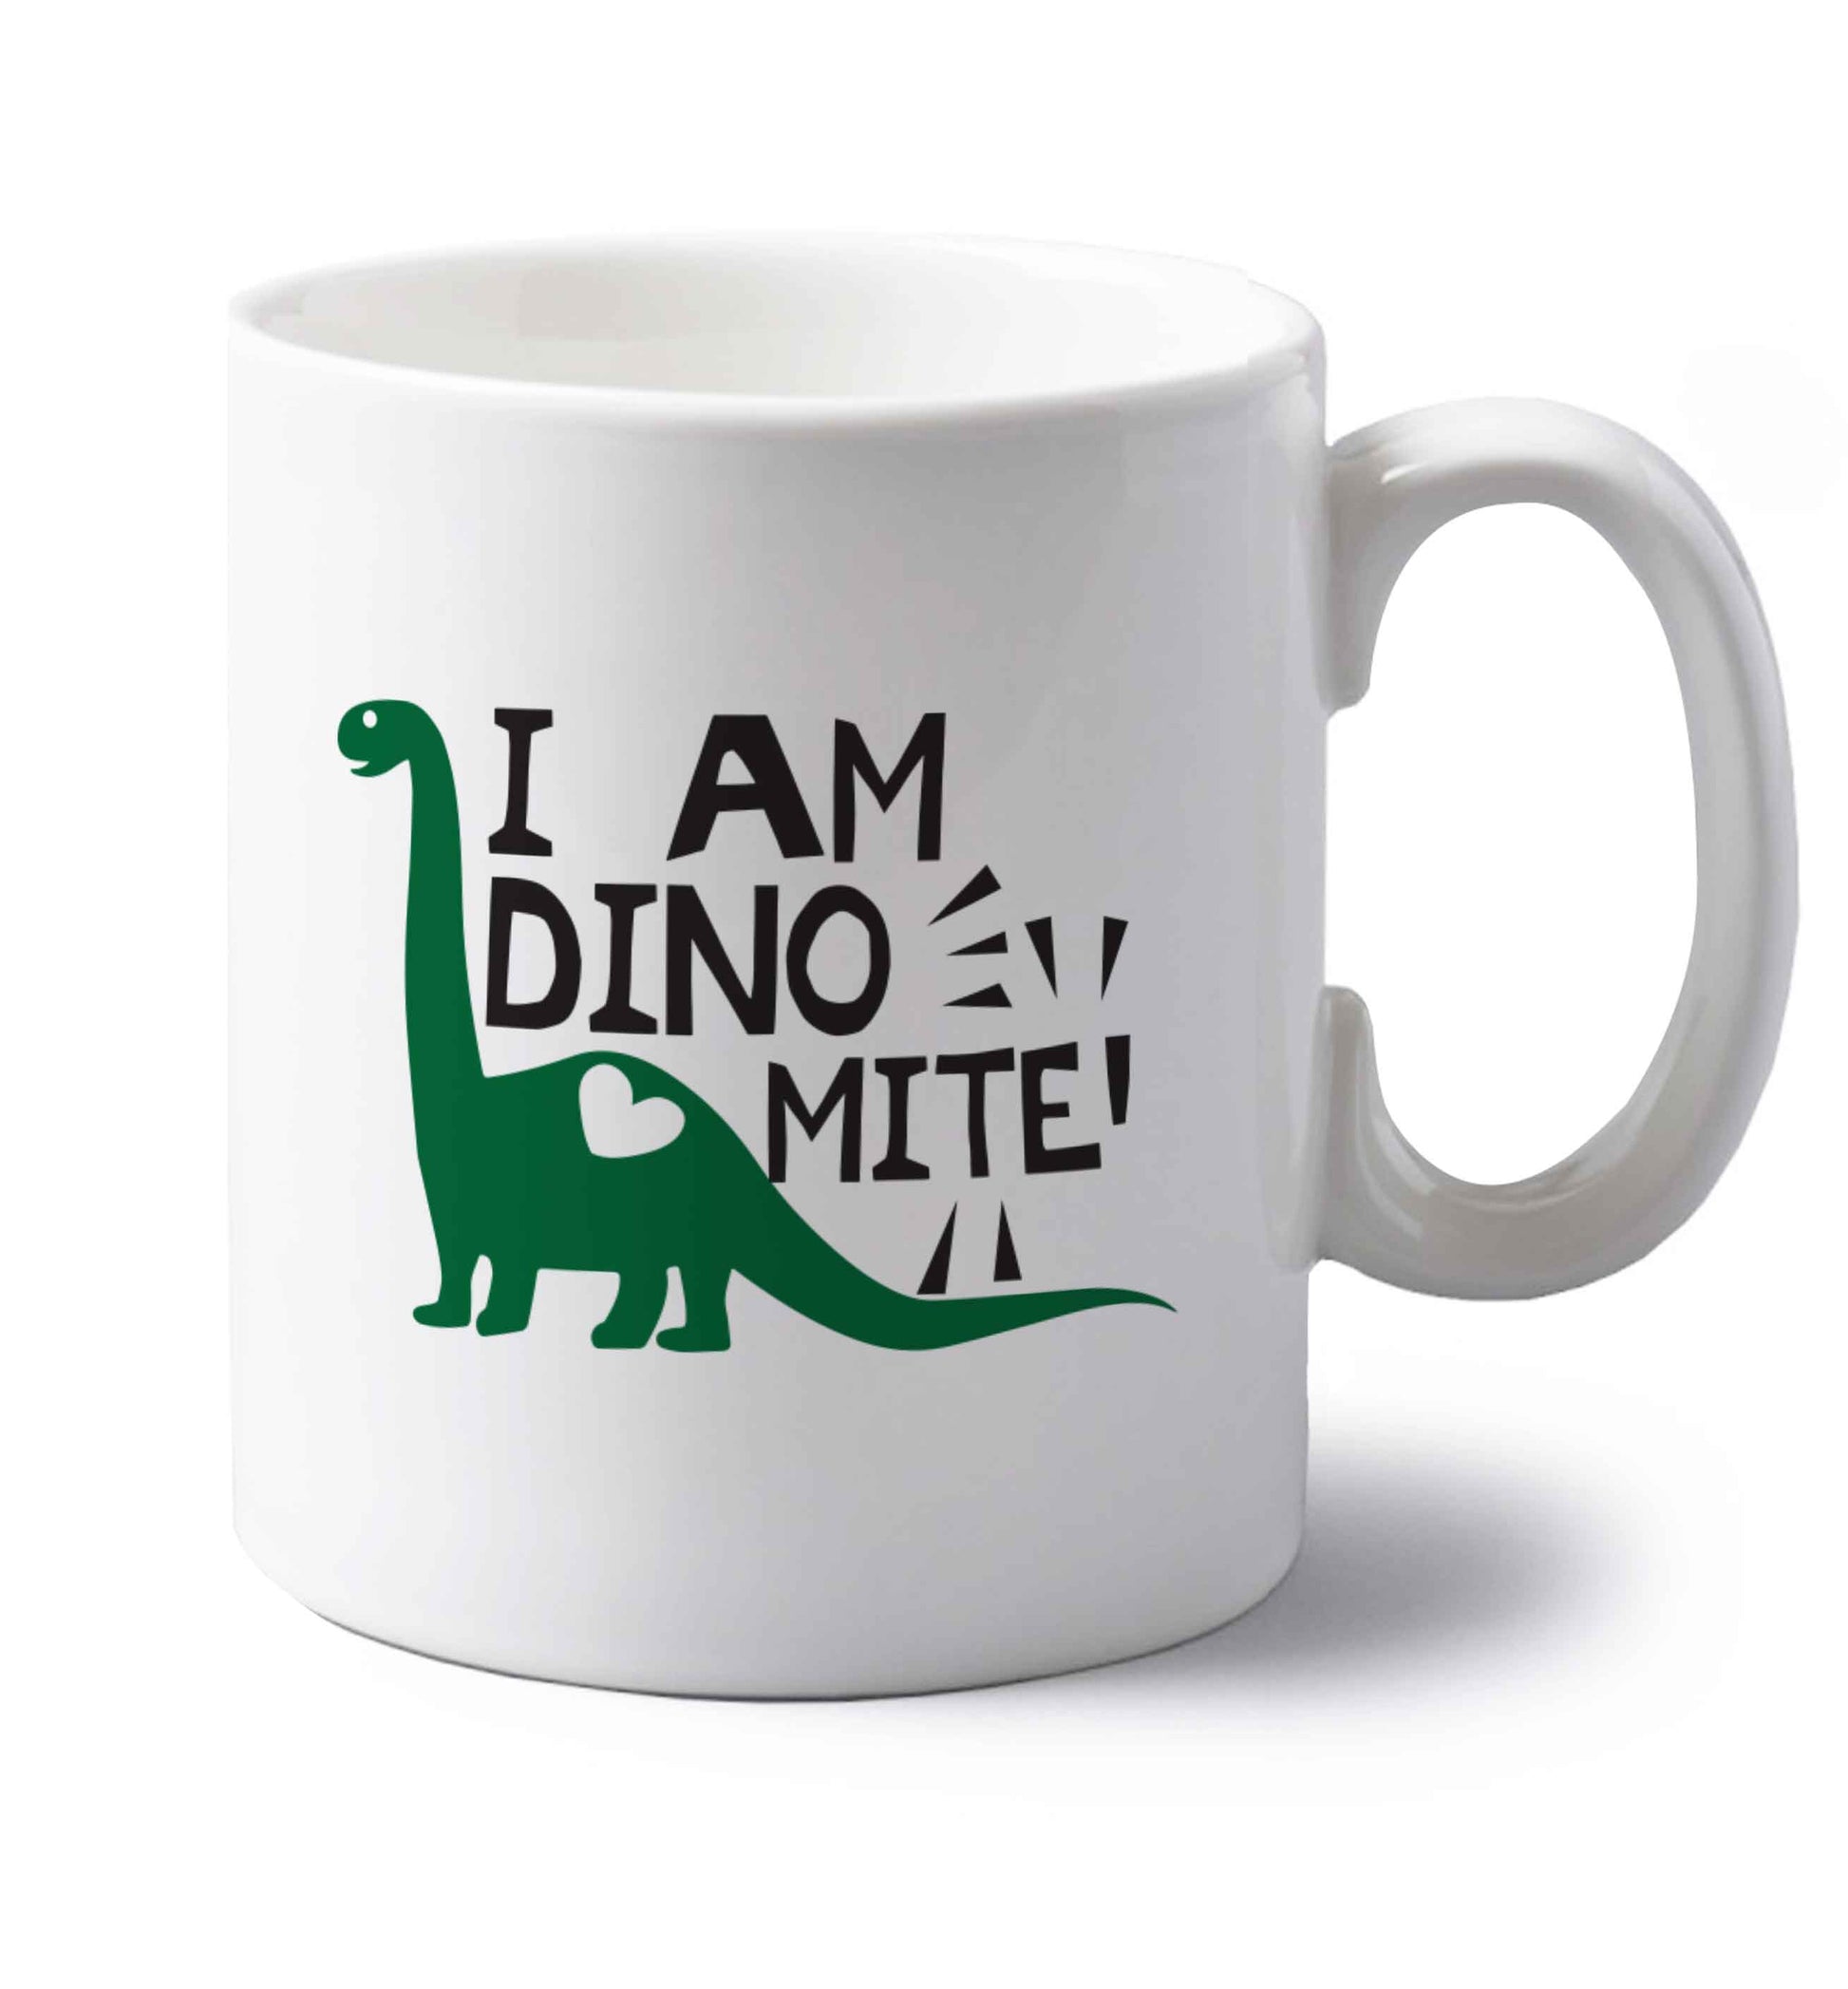 I am dinomite! left handed white ceramic mug 